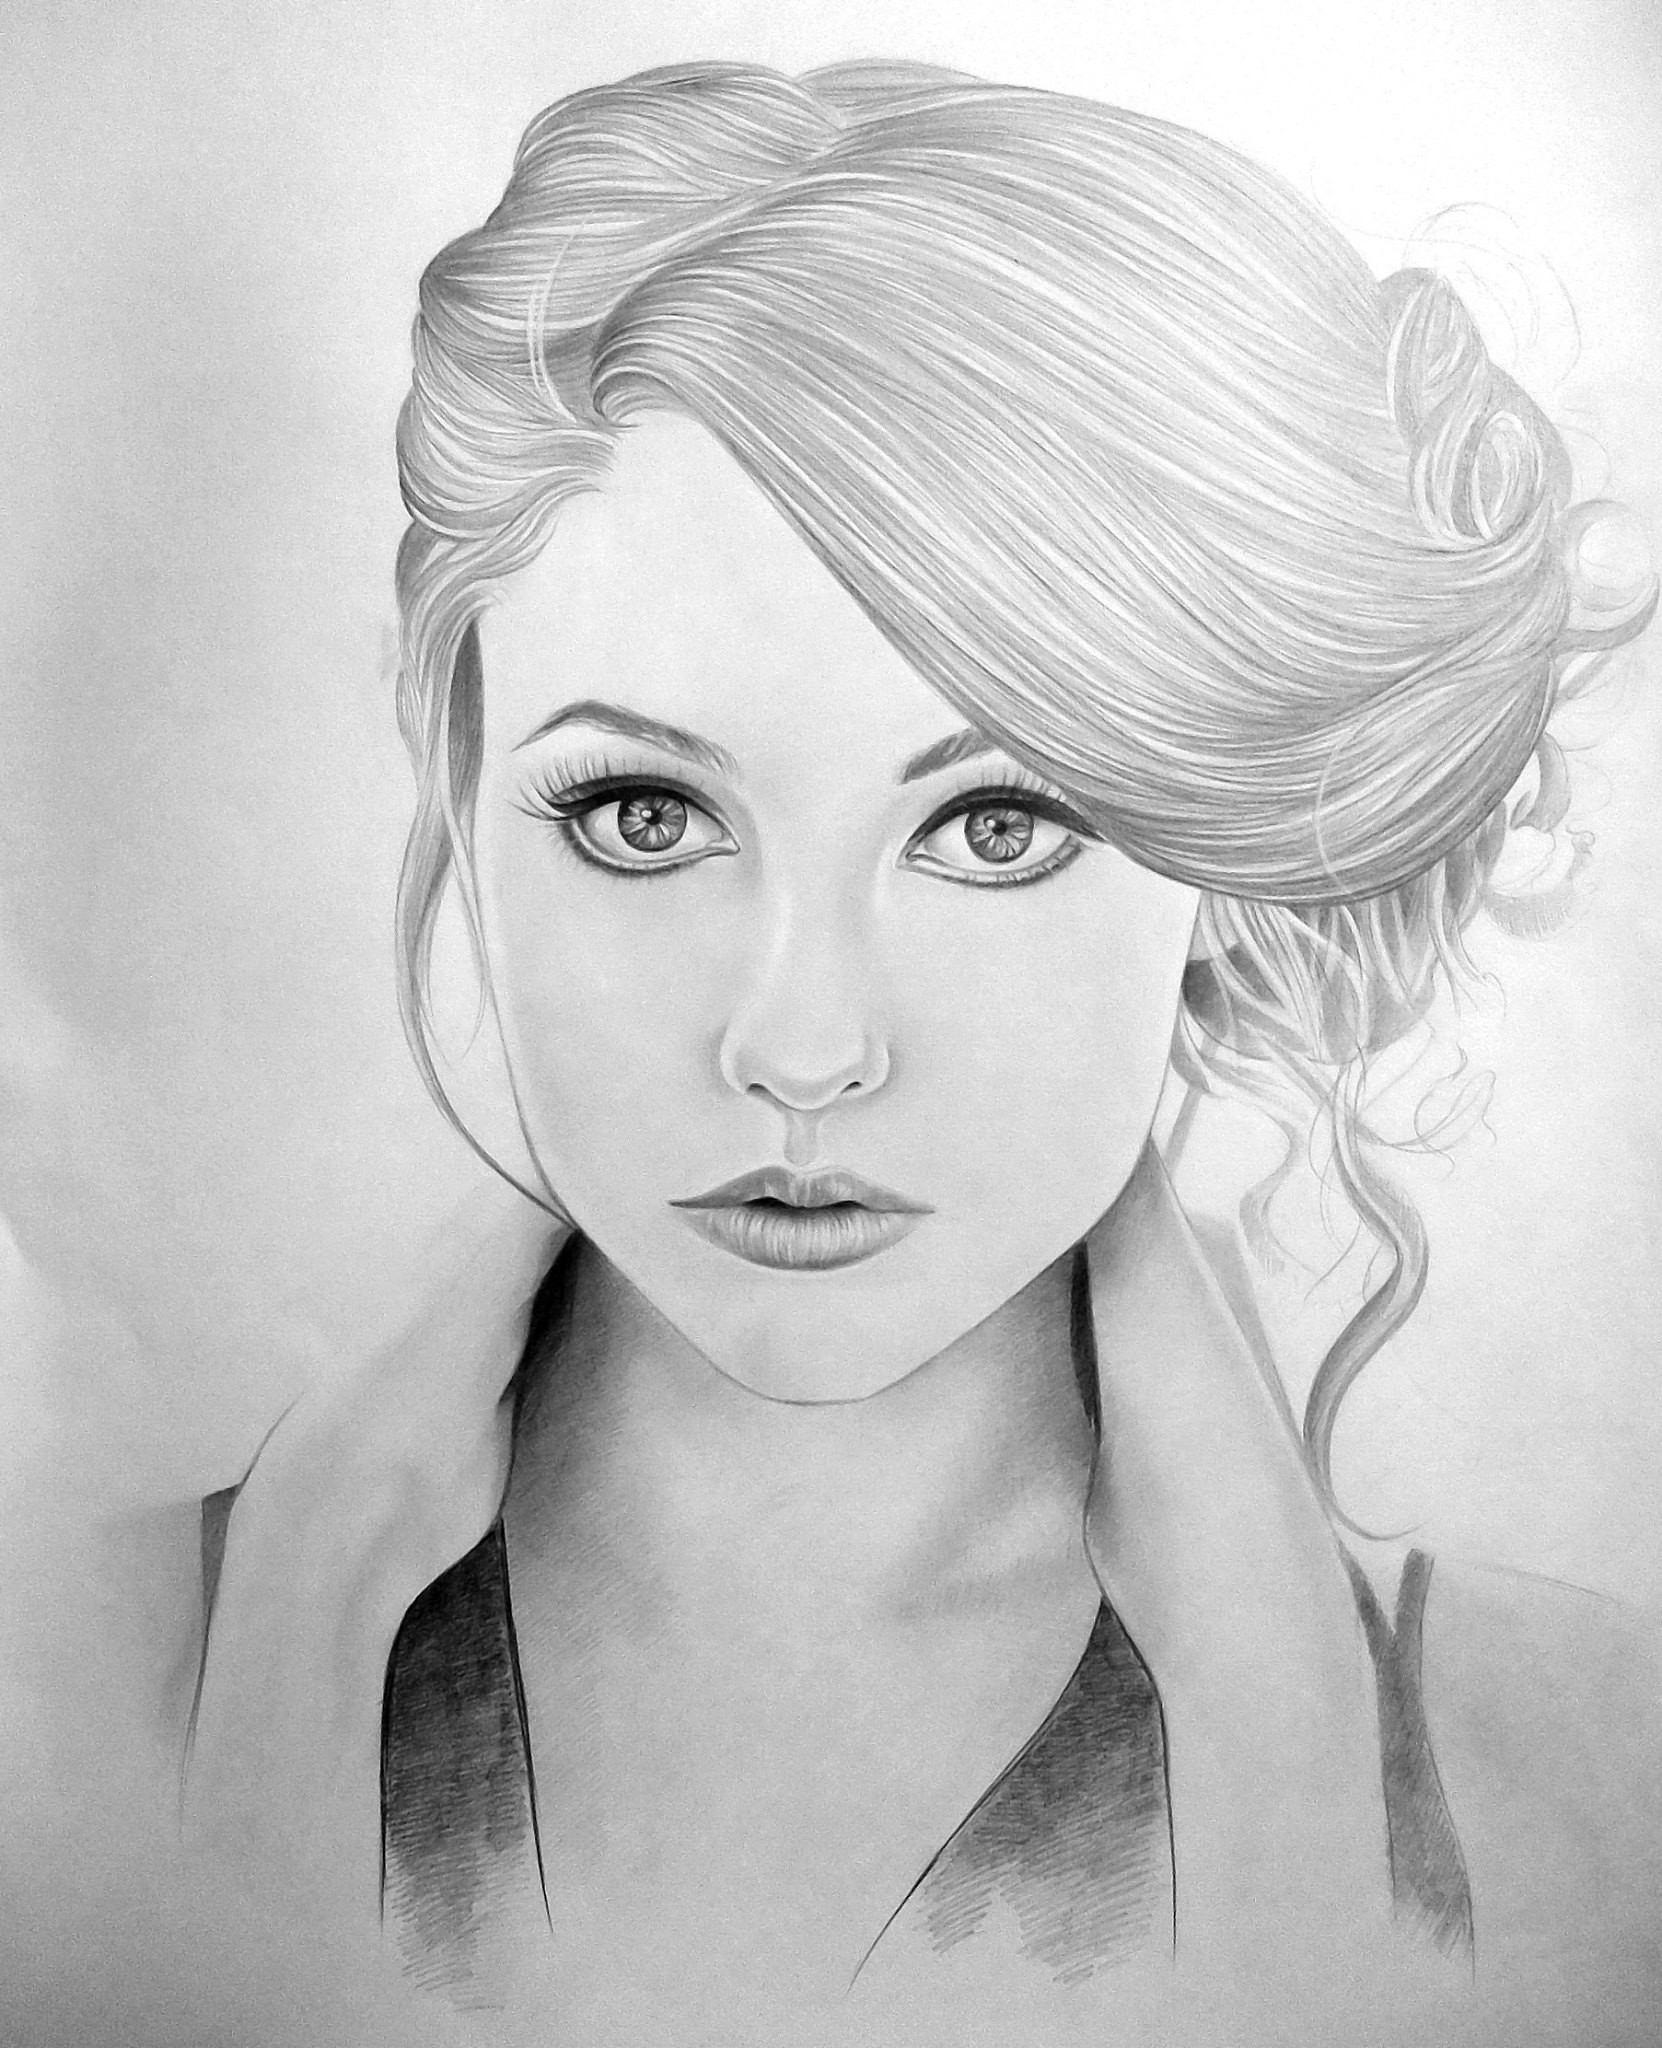 Рисунок девушки простым карандашом. Девушка карандашом. Портрет девушки карандашом. Картинки карандашом девушки. Красивые портреты девушек карандашом.